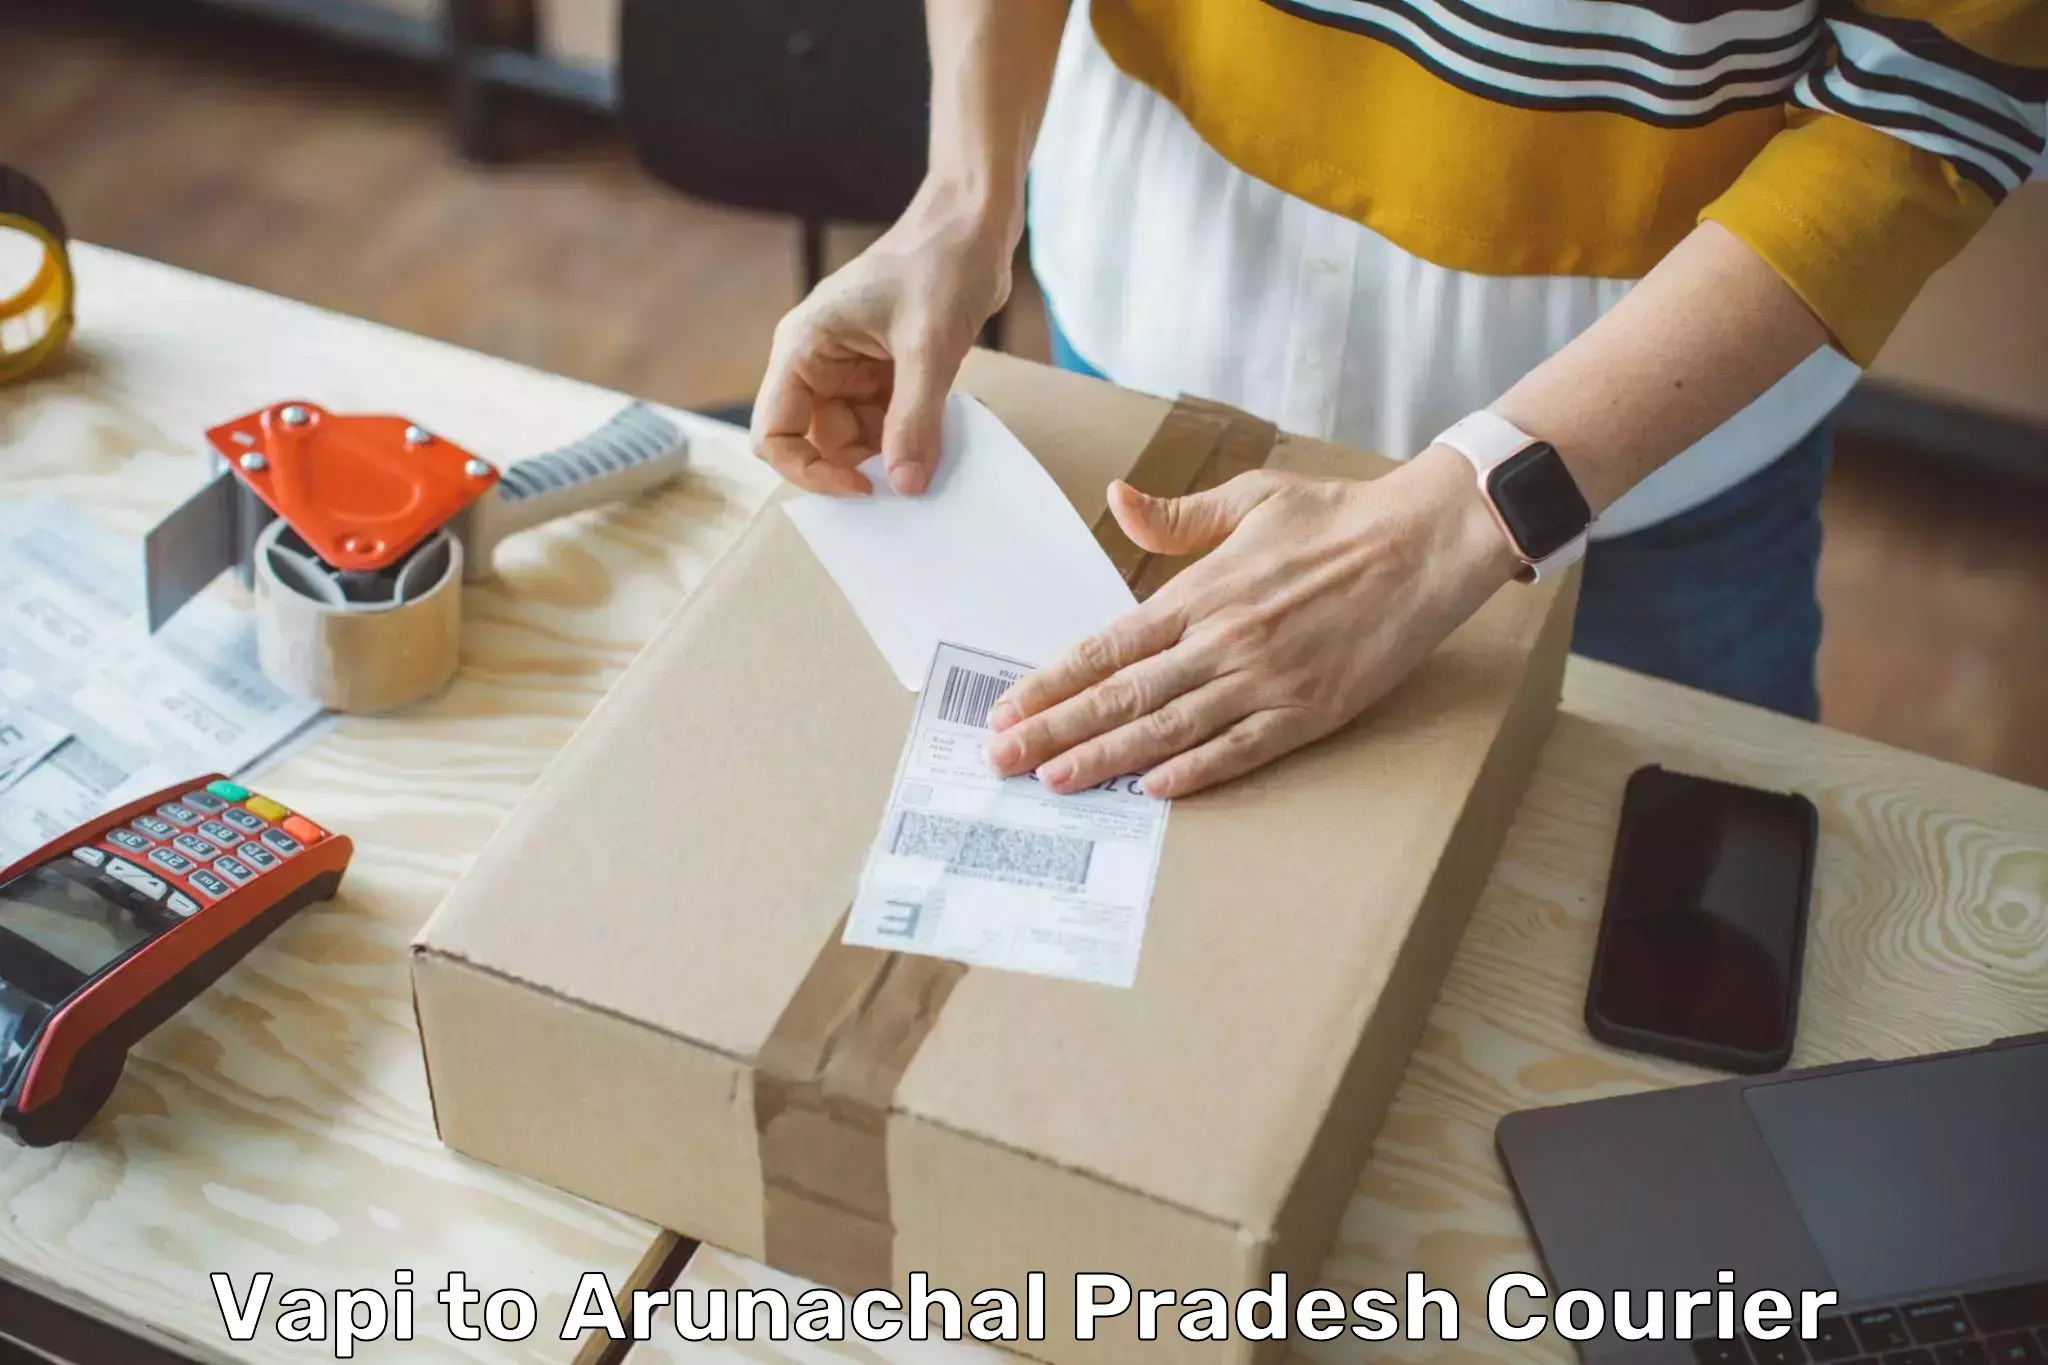 Courier service innovation Vapi to Arunachal Pradesh